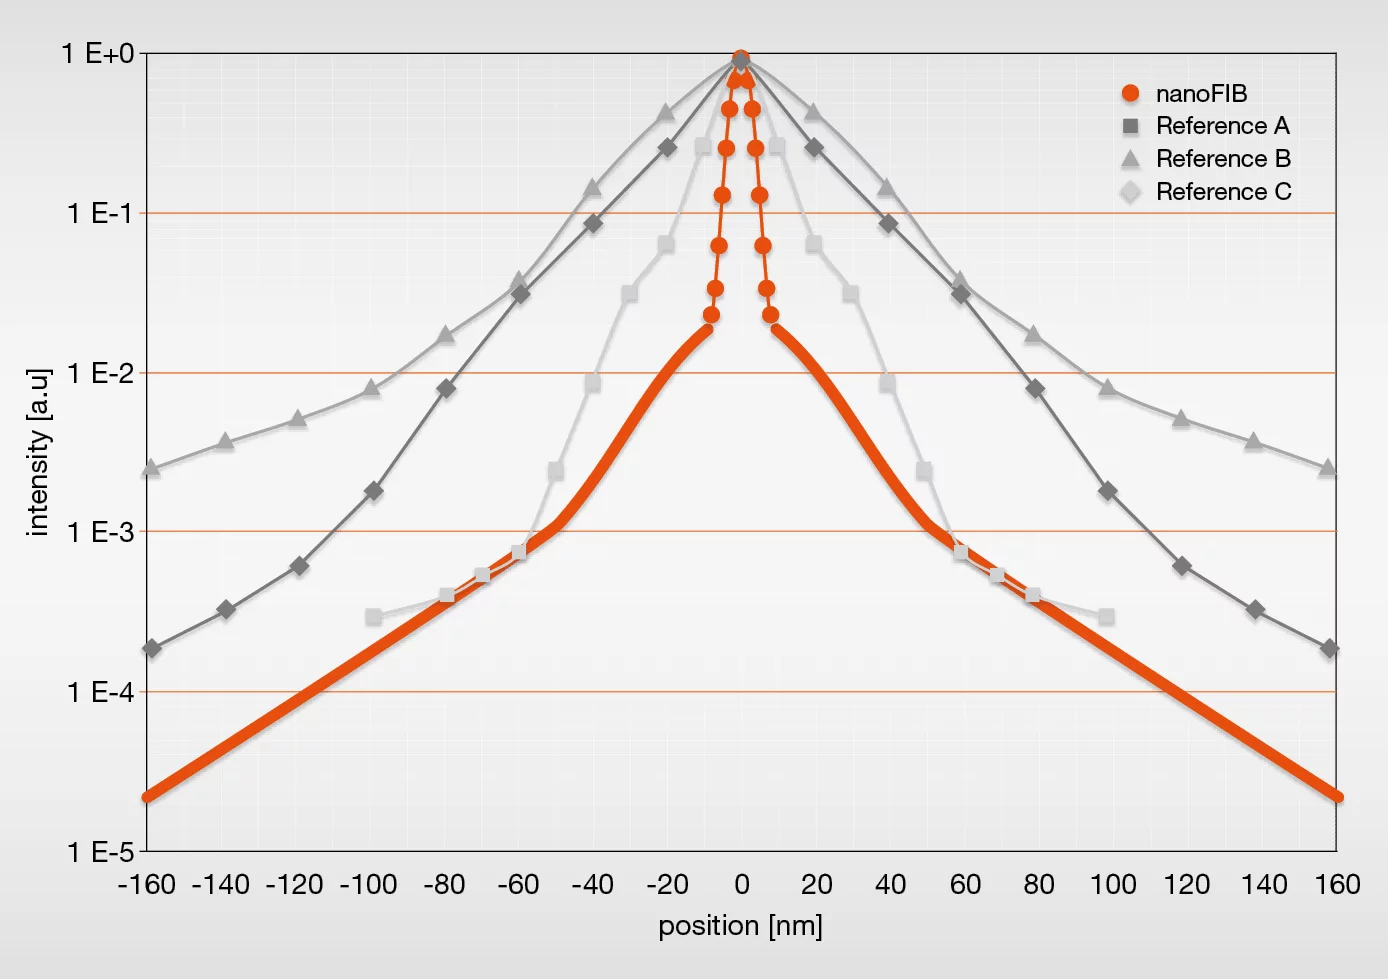 Illustration of the Beam current distribution of the nanoFIB